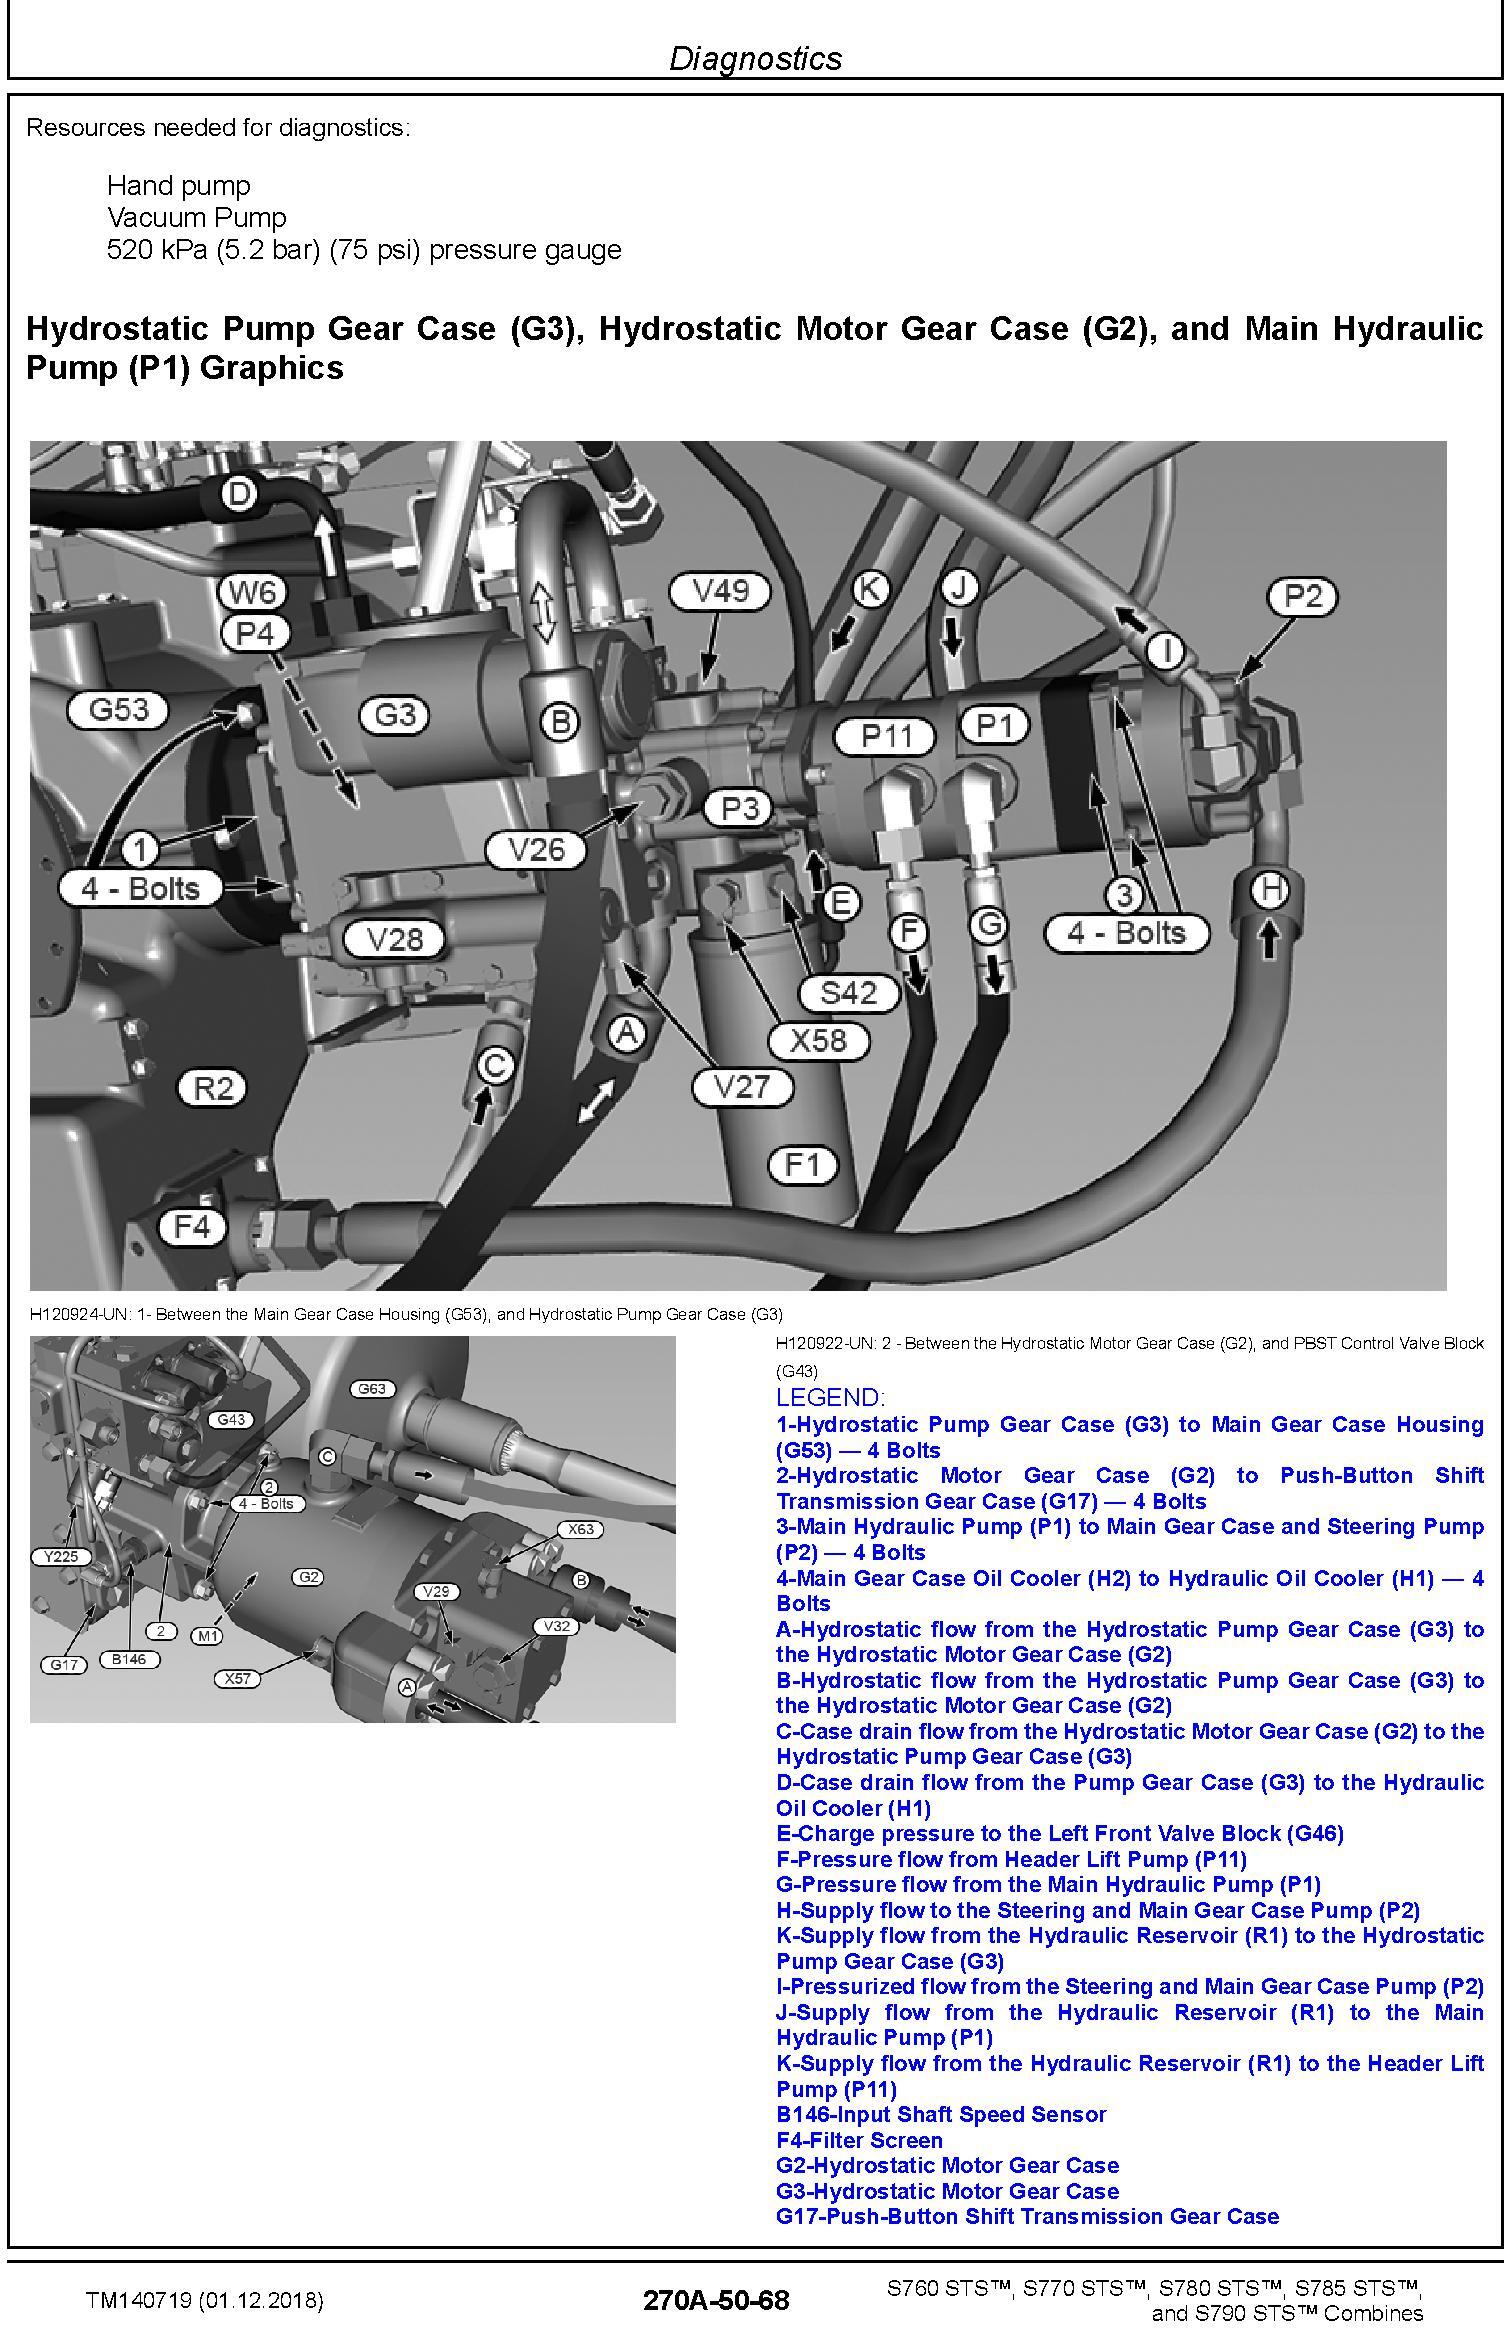 John Deere S760, S770, S780, S785, S790 STS Combines Diagnostic Technical Service Manual (TM140719) - 1